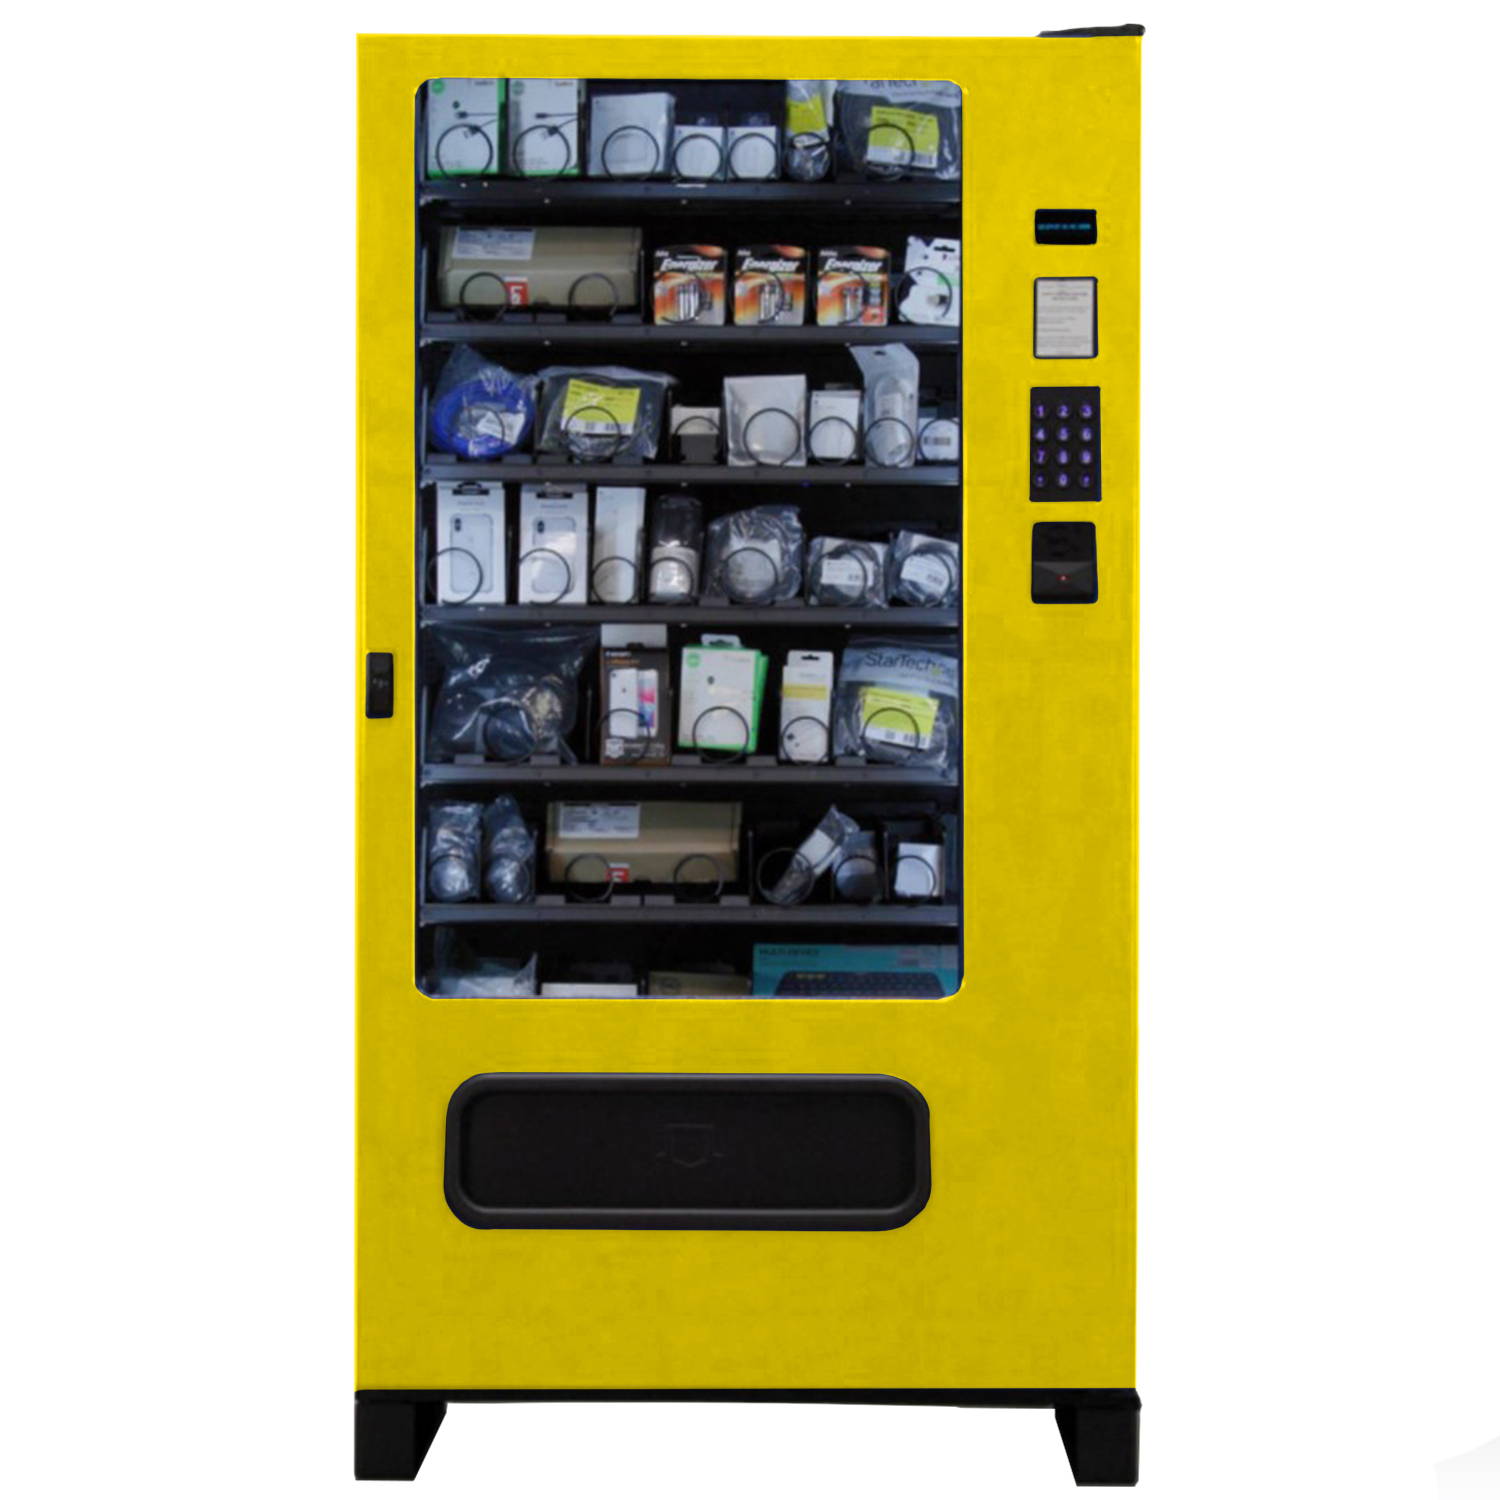 Education supplies vending machine.